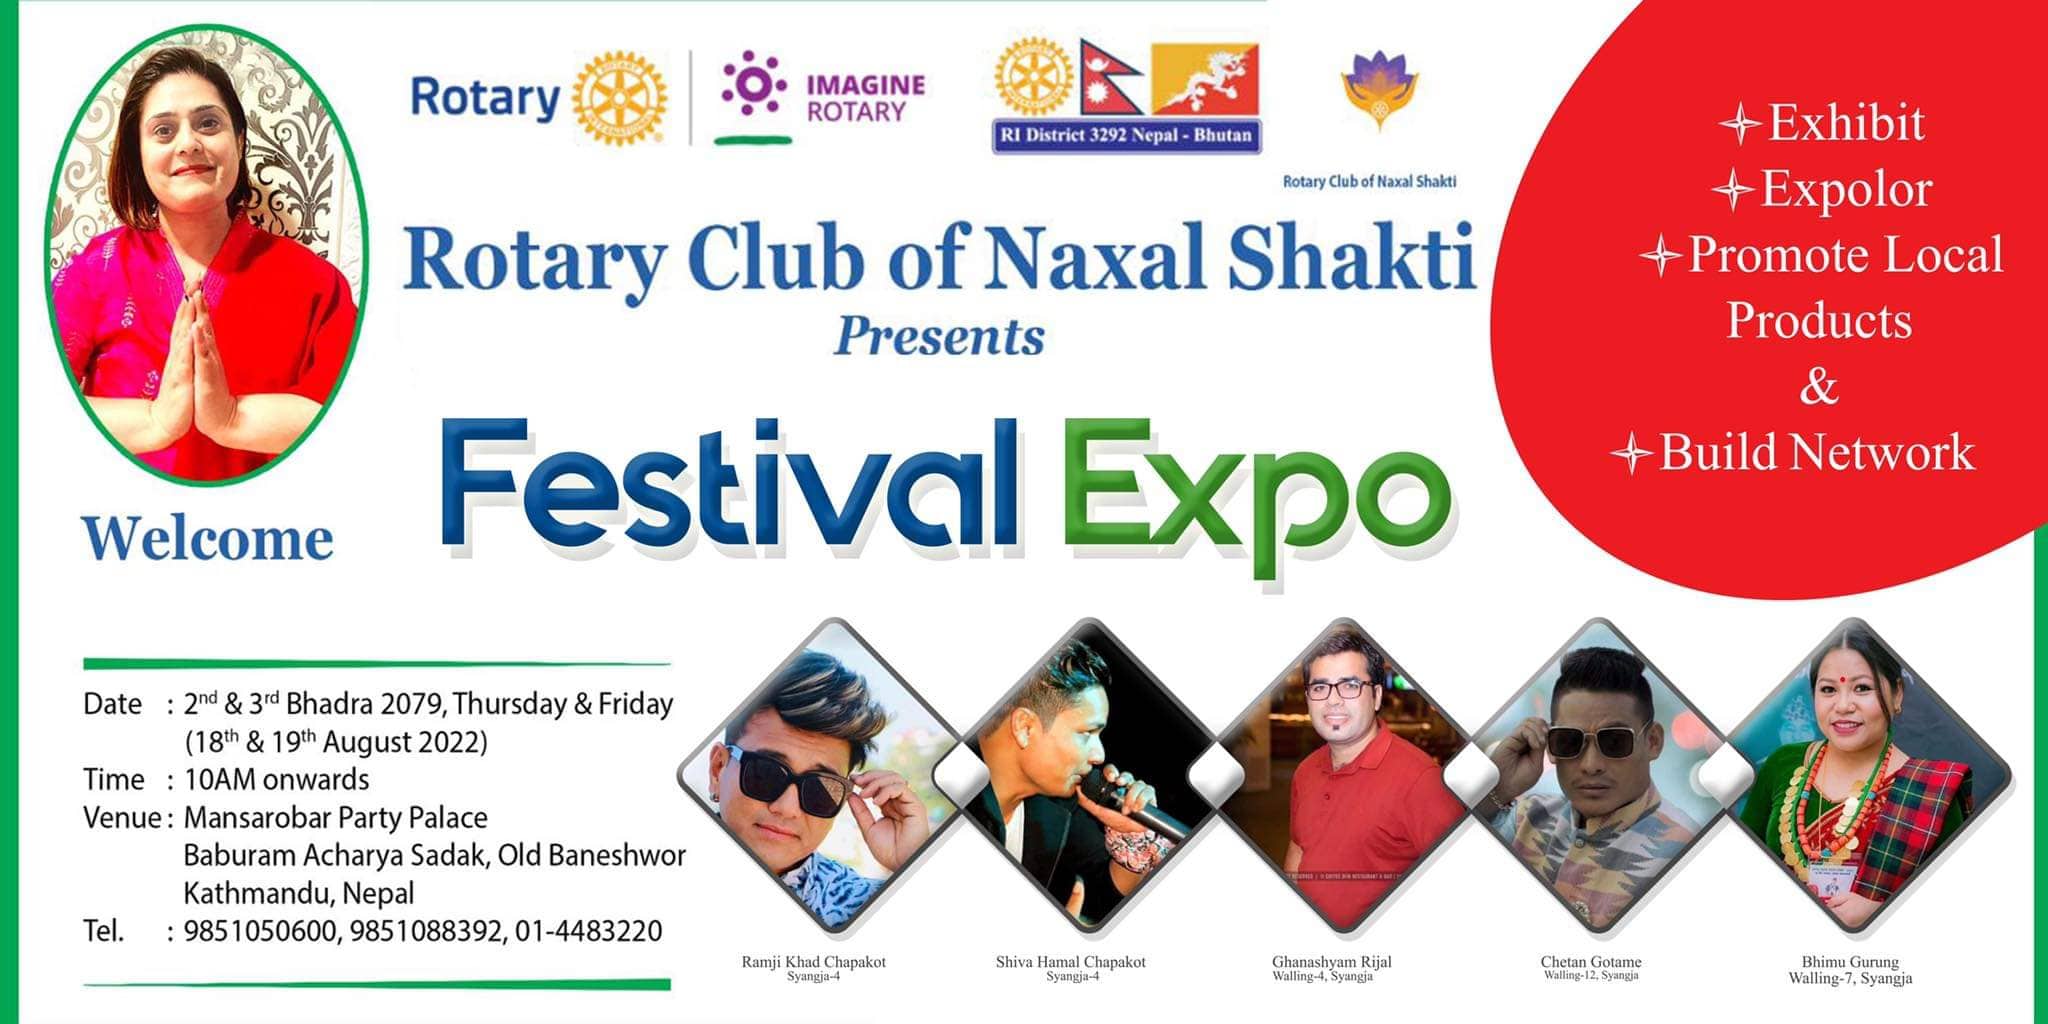 Rotary Club of Naxal Shakti is going to do a special Teej show